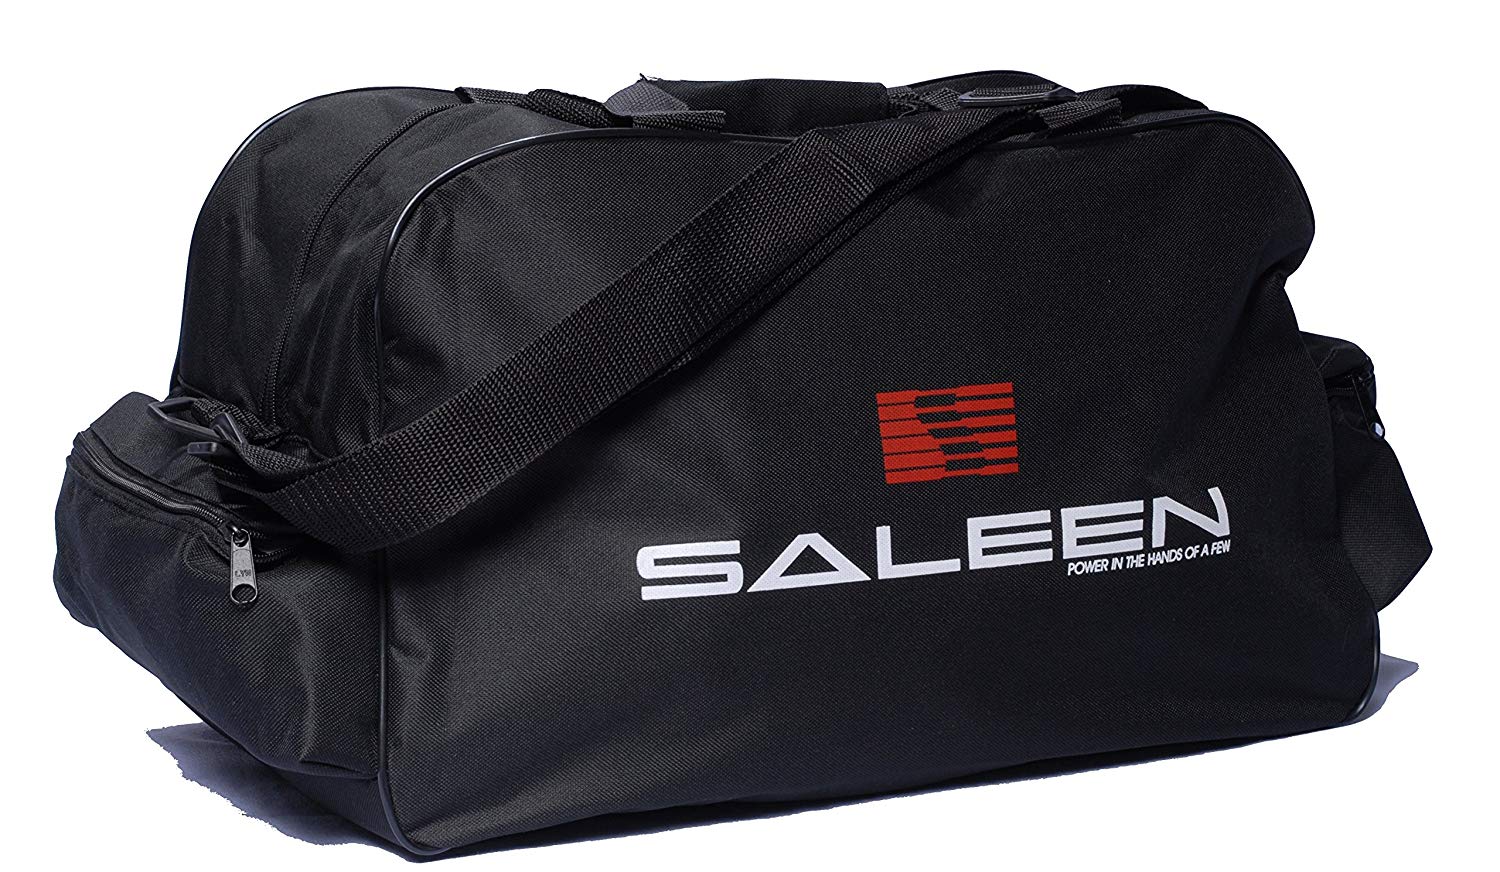 Saleen Logo - Amazon.com. Saleen Logo Bag Unisex Leisure School Leisure Shoulder